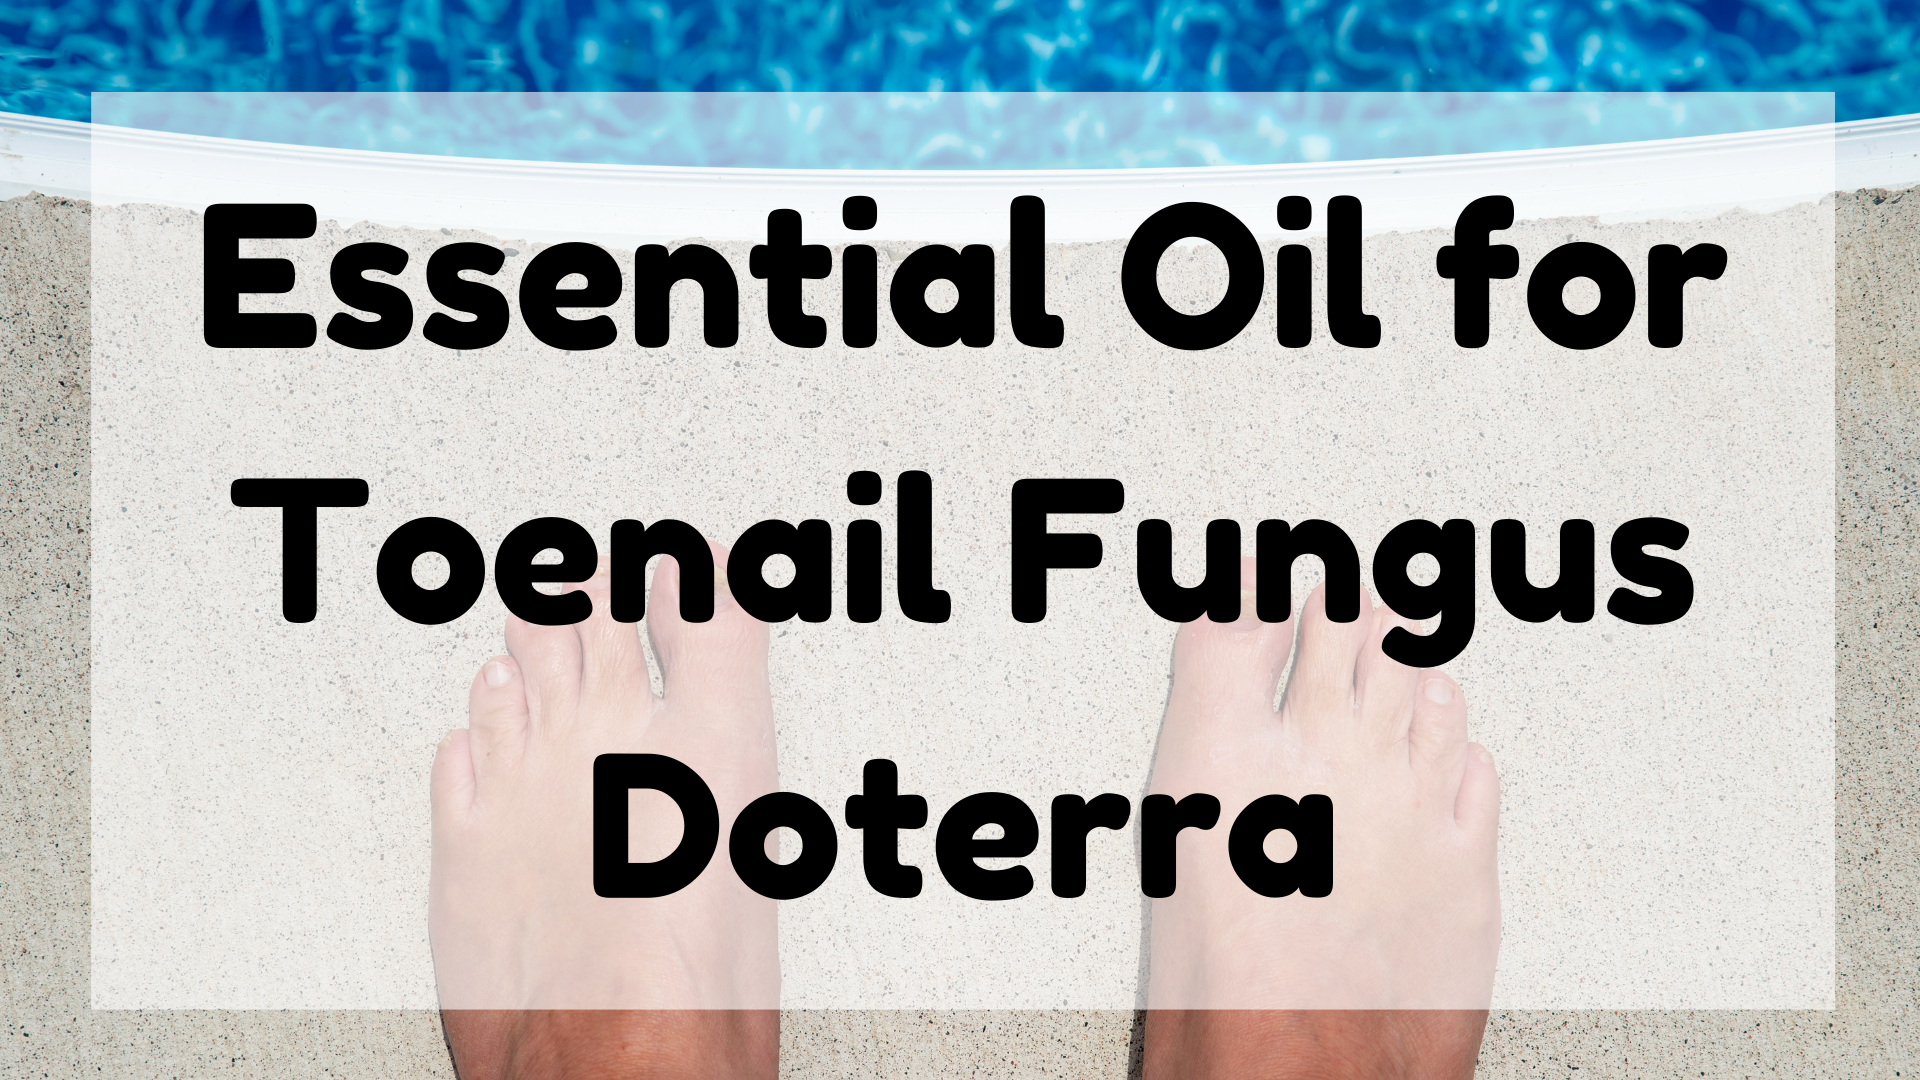 Essential Oil for Toenail Fungus Doterra featured image